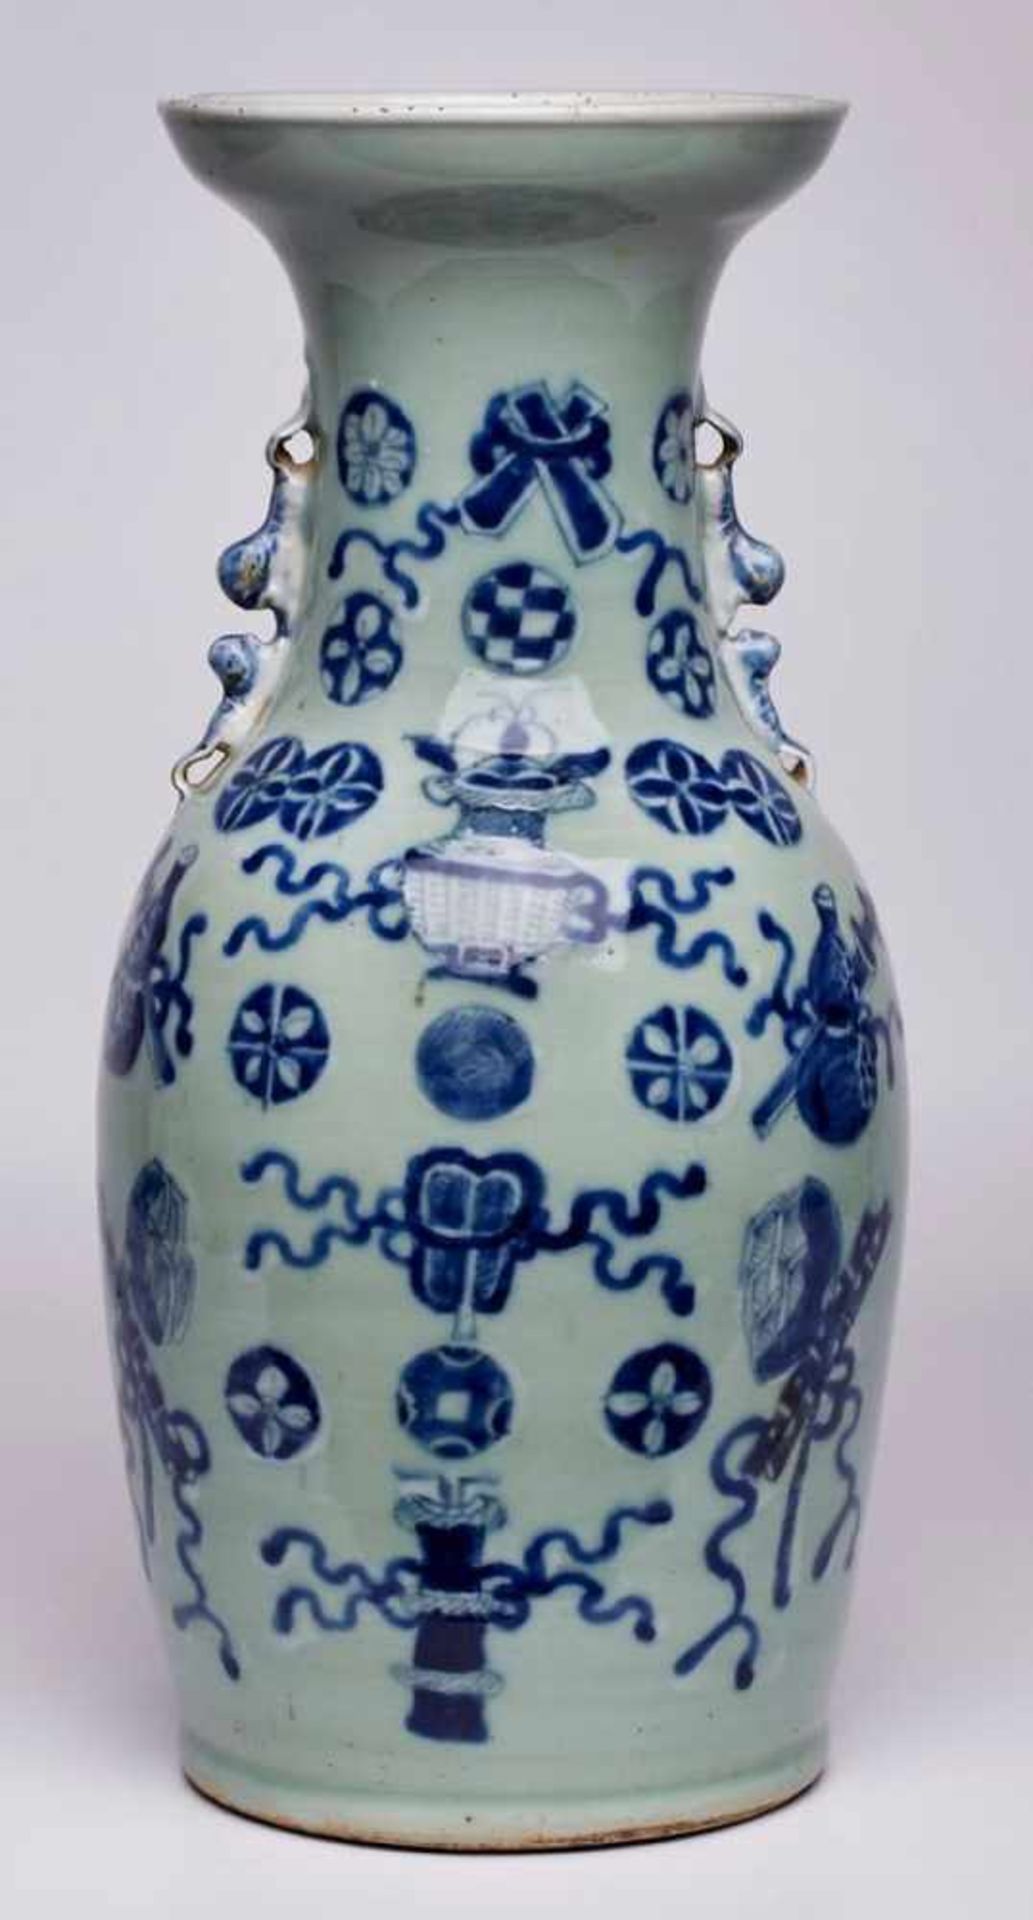 Gr. Vase, China wohl Kuang-Hsu (1875-1908).Porzellan m. Blaumalerei-Dekor. Amphore m. weit